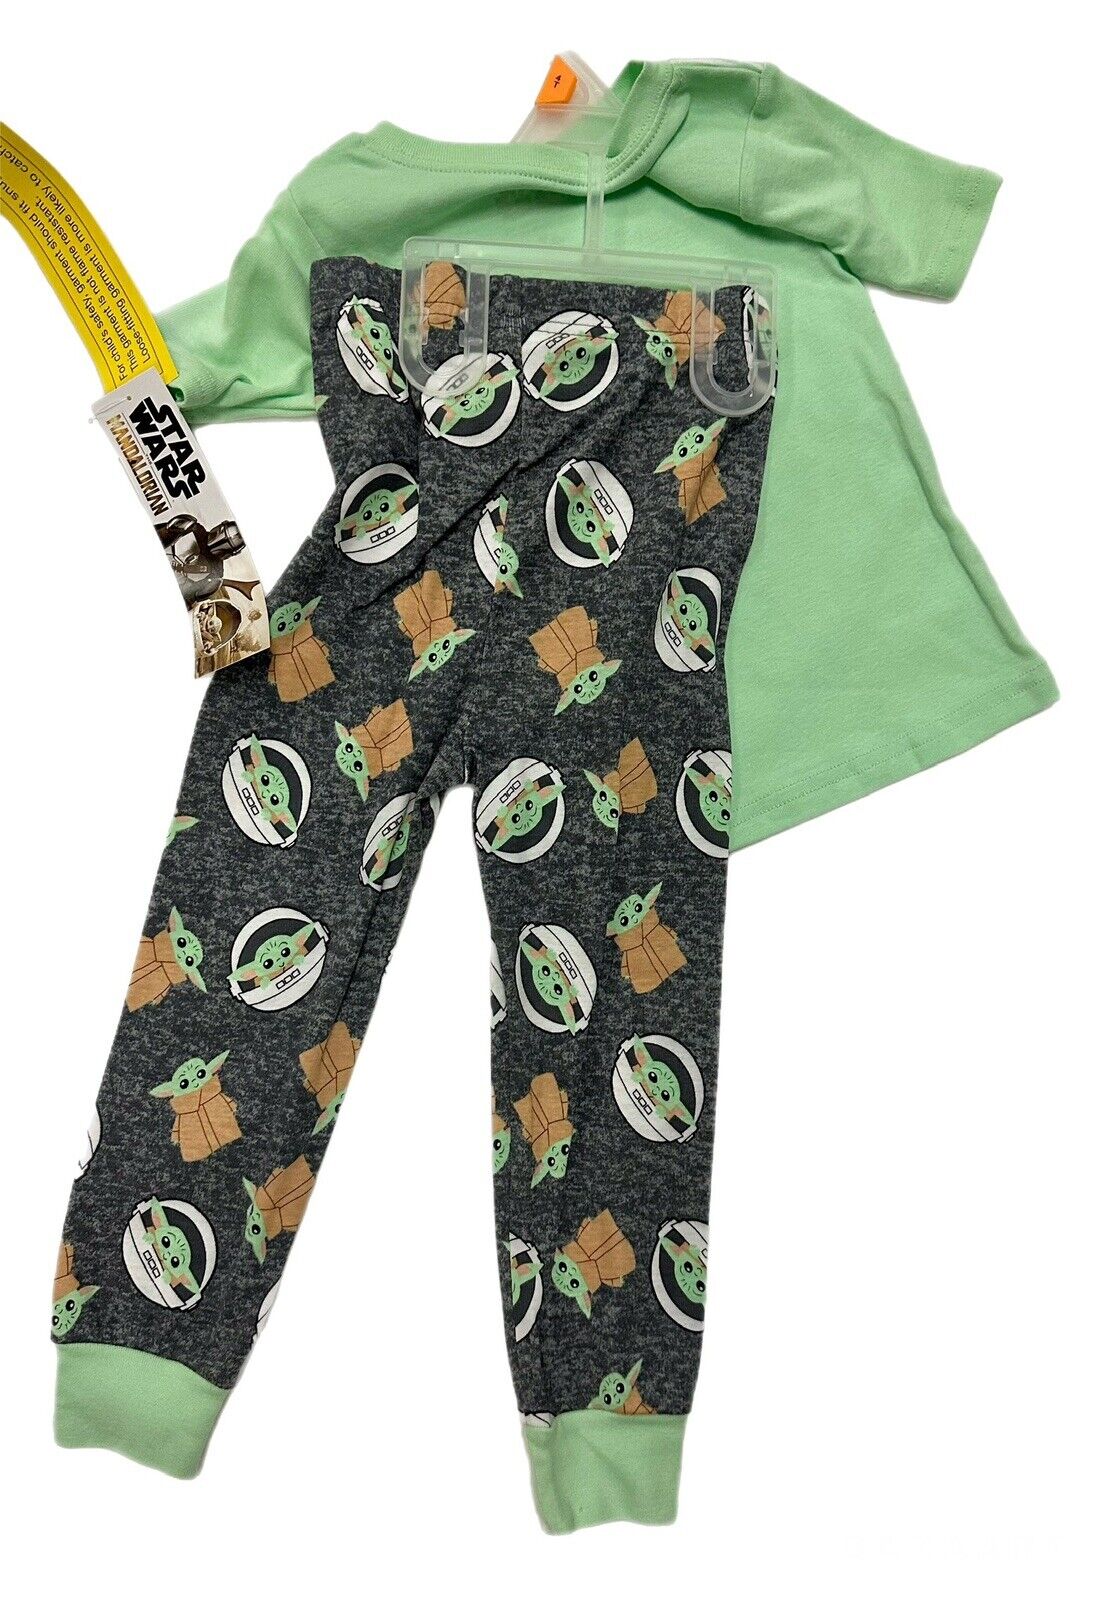 Star Wars Baby Yoda "Cutest in the Galaxy" Toddler Boy Pajama Set Size 4T